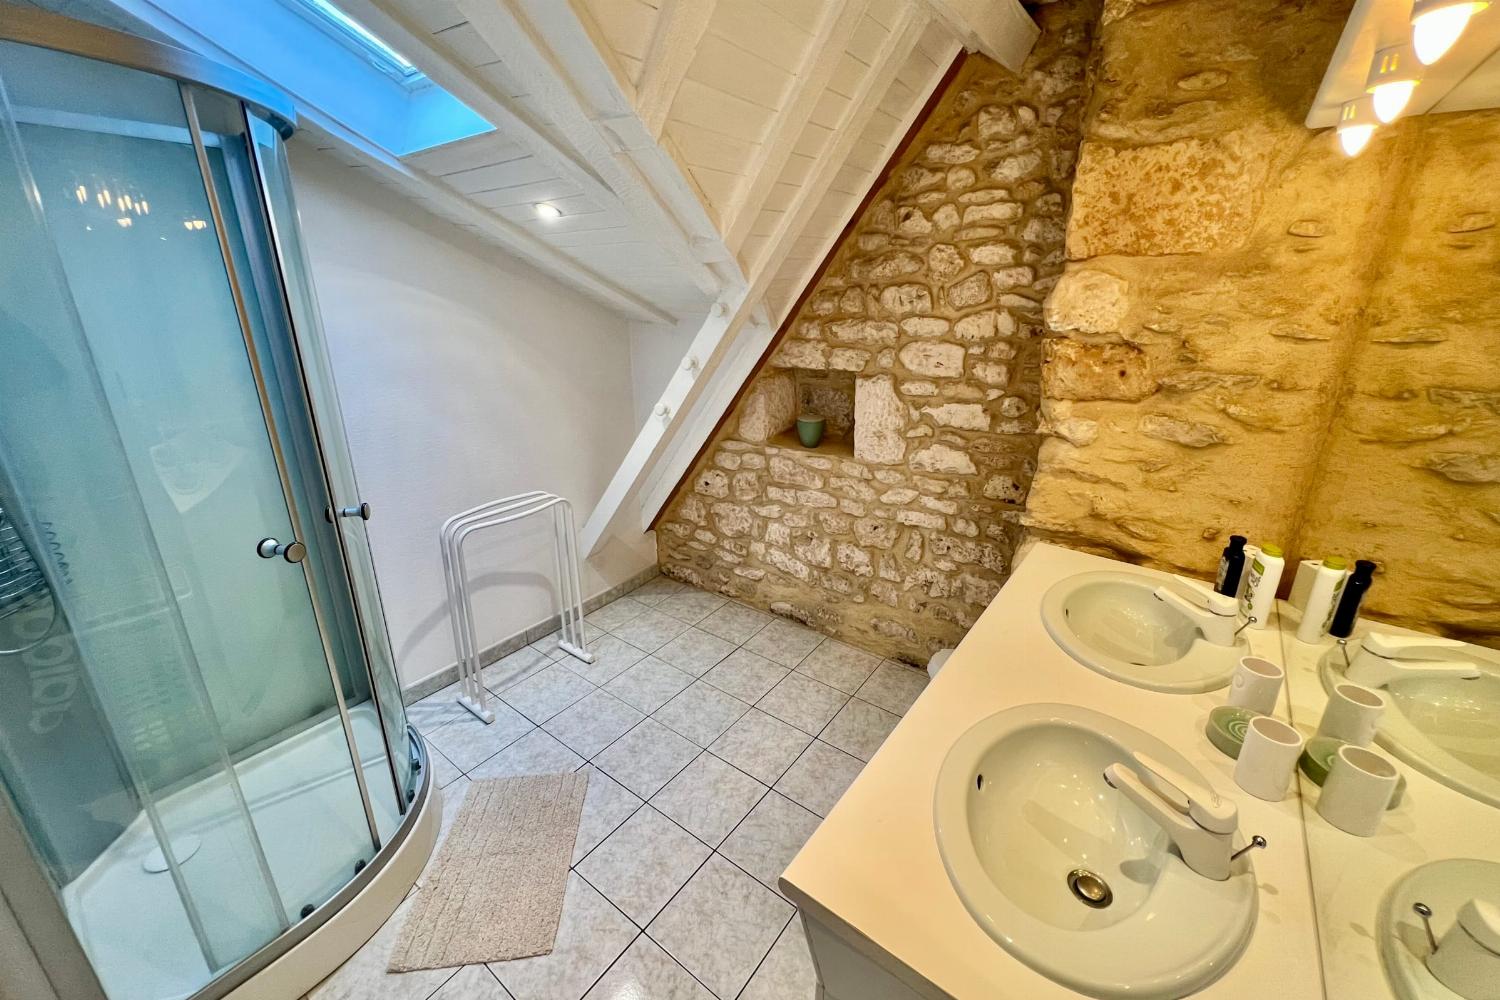 Salle de bain | Location de vacances en Dordogne